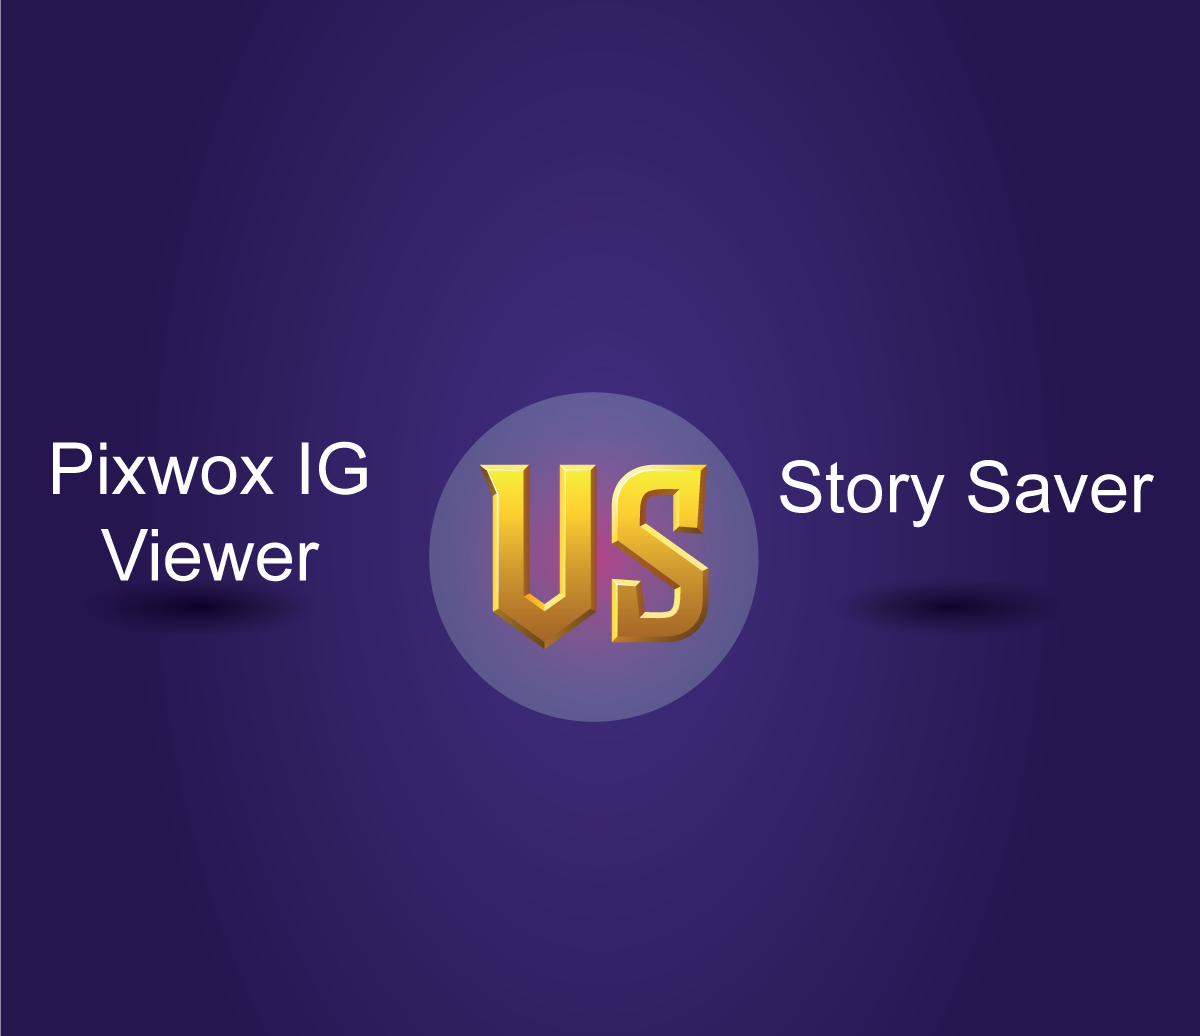 Pixwox IG Viewer VS Story Saver